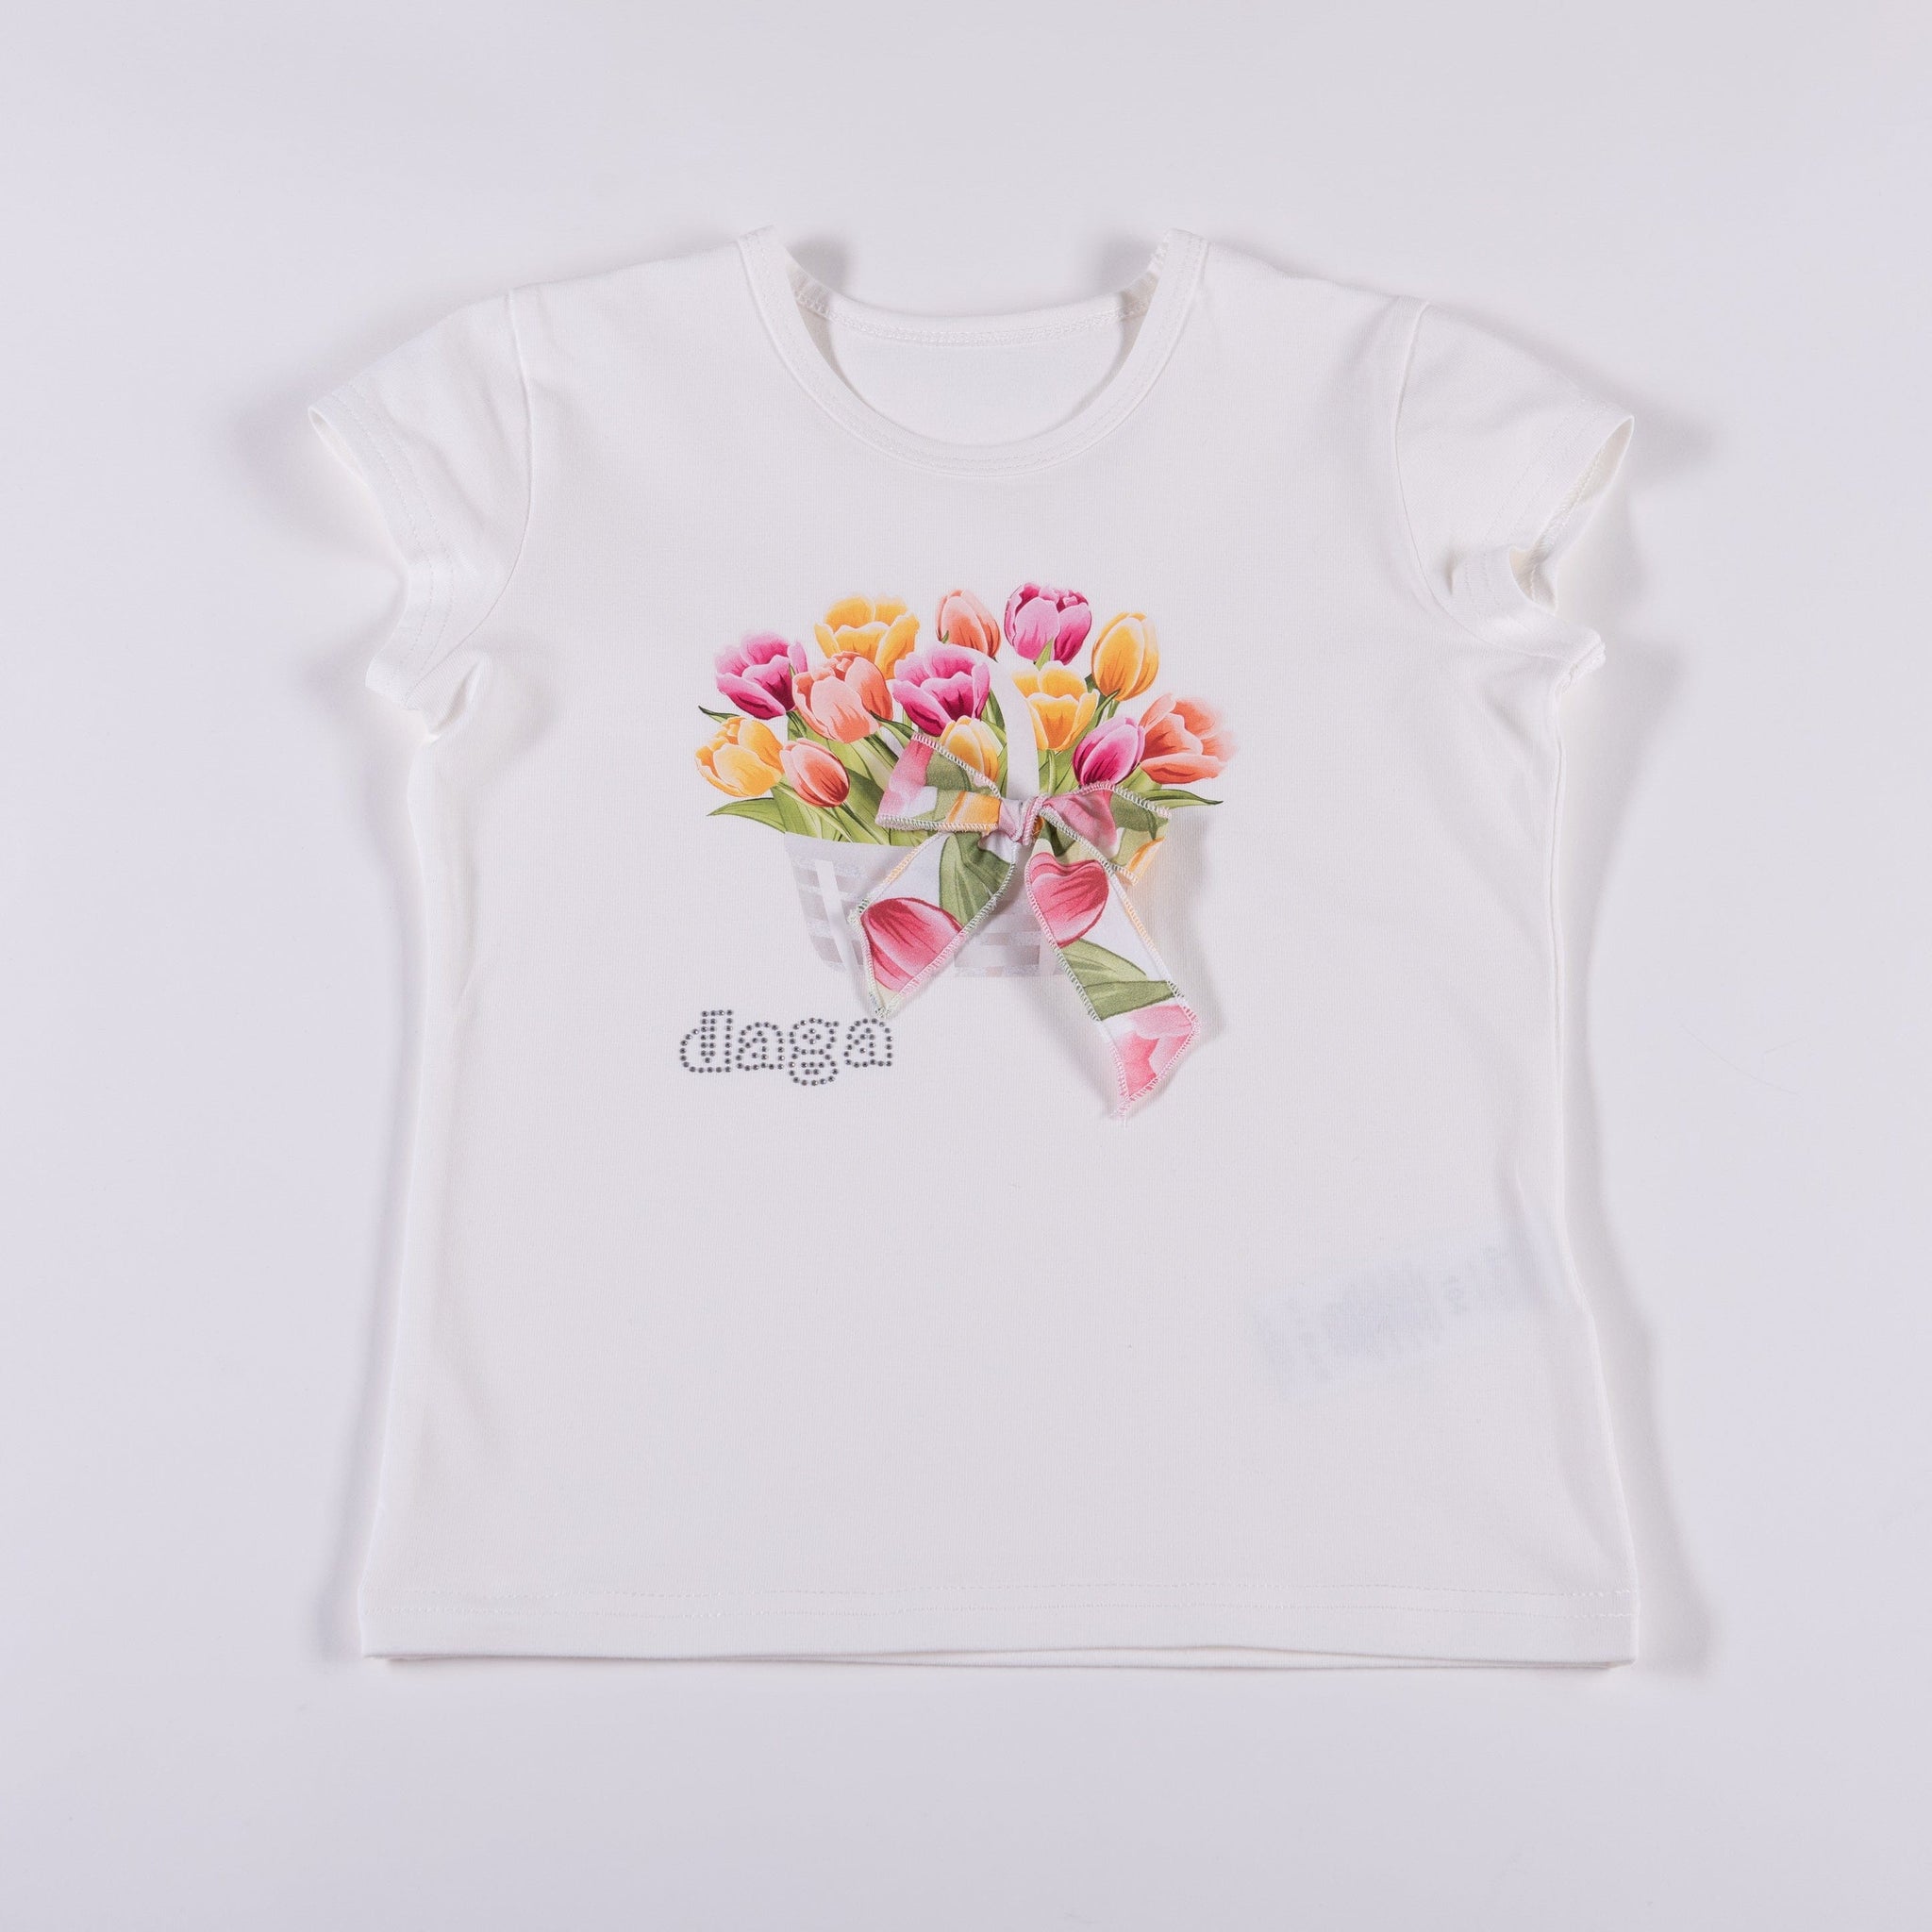 Daga 2yr 9683 Daga Girls White Shirt with Floral Print